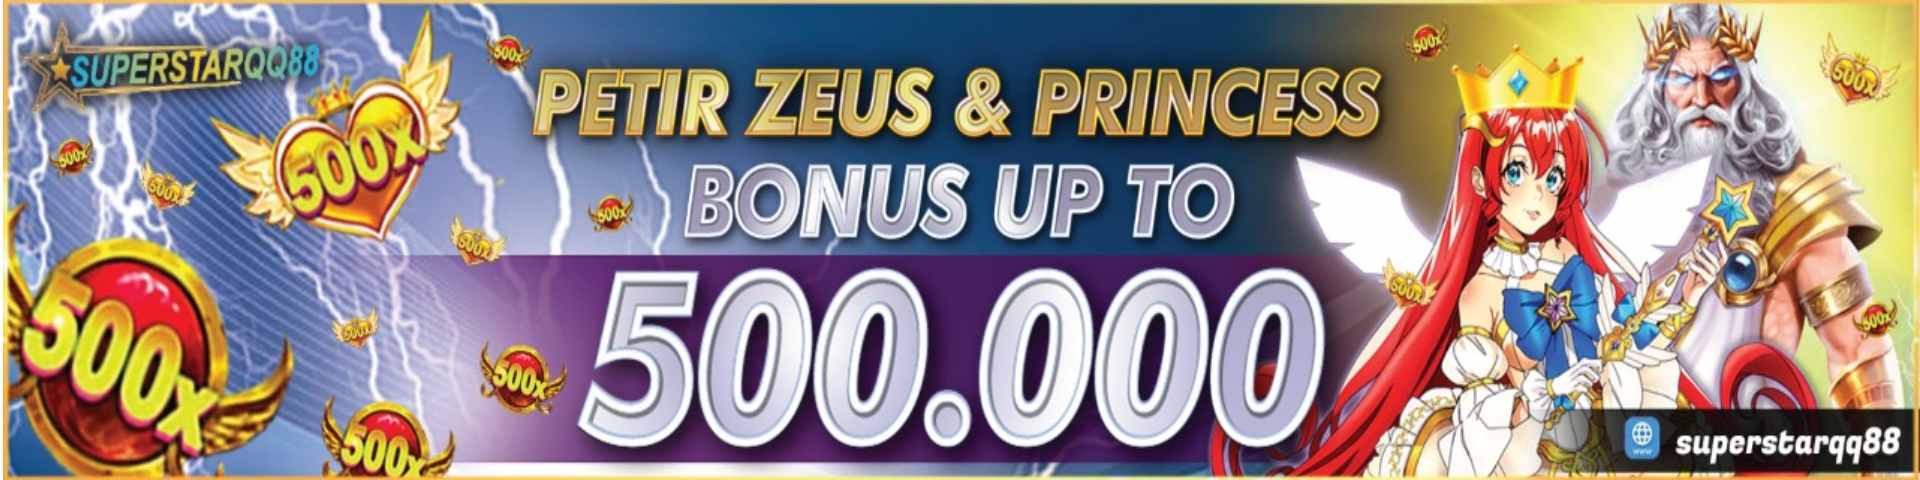 BONUS PETIR ZEUS DAN PRINCES UP TO 500RIBU